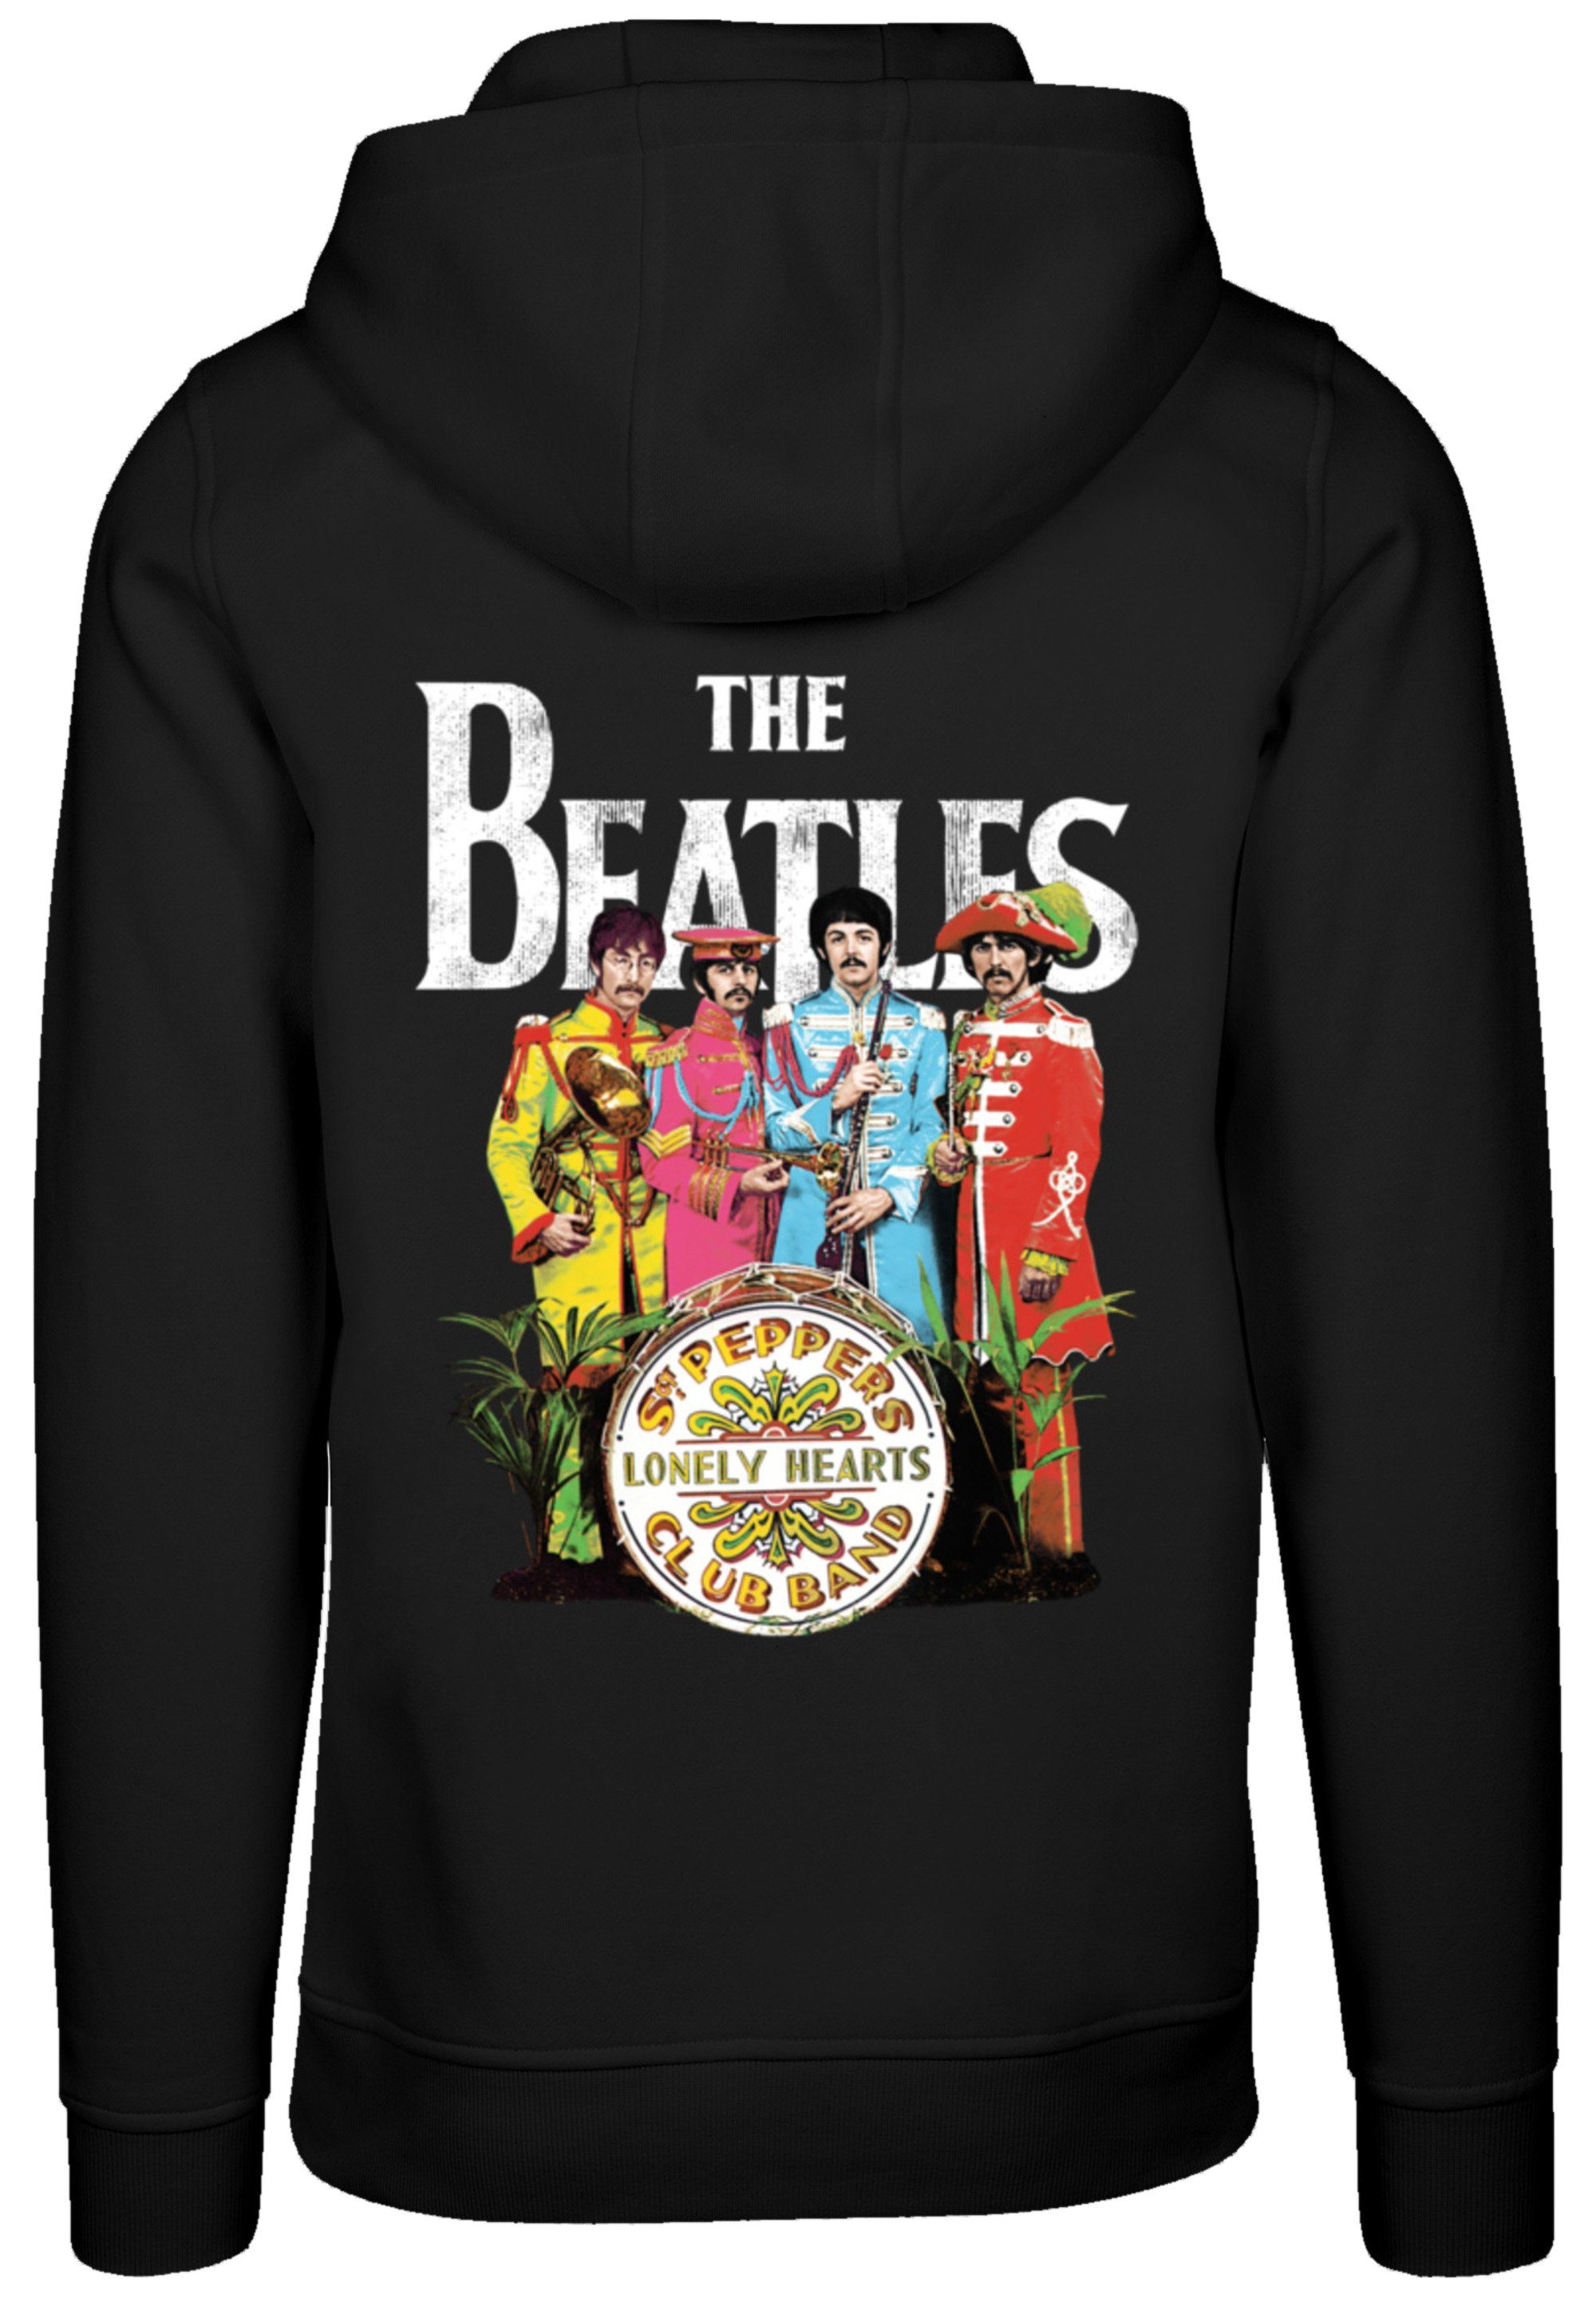 Pepper The Hoodie, Warm, F4NT4STIC Band Bequem Kapuzenpullover Rock schwarz Musik Beatles Sgt